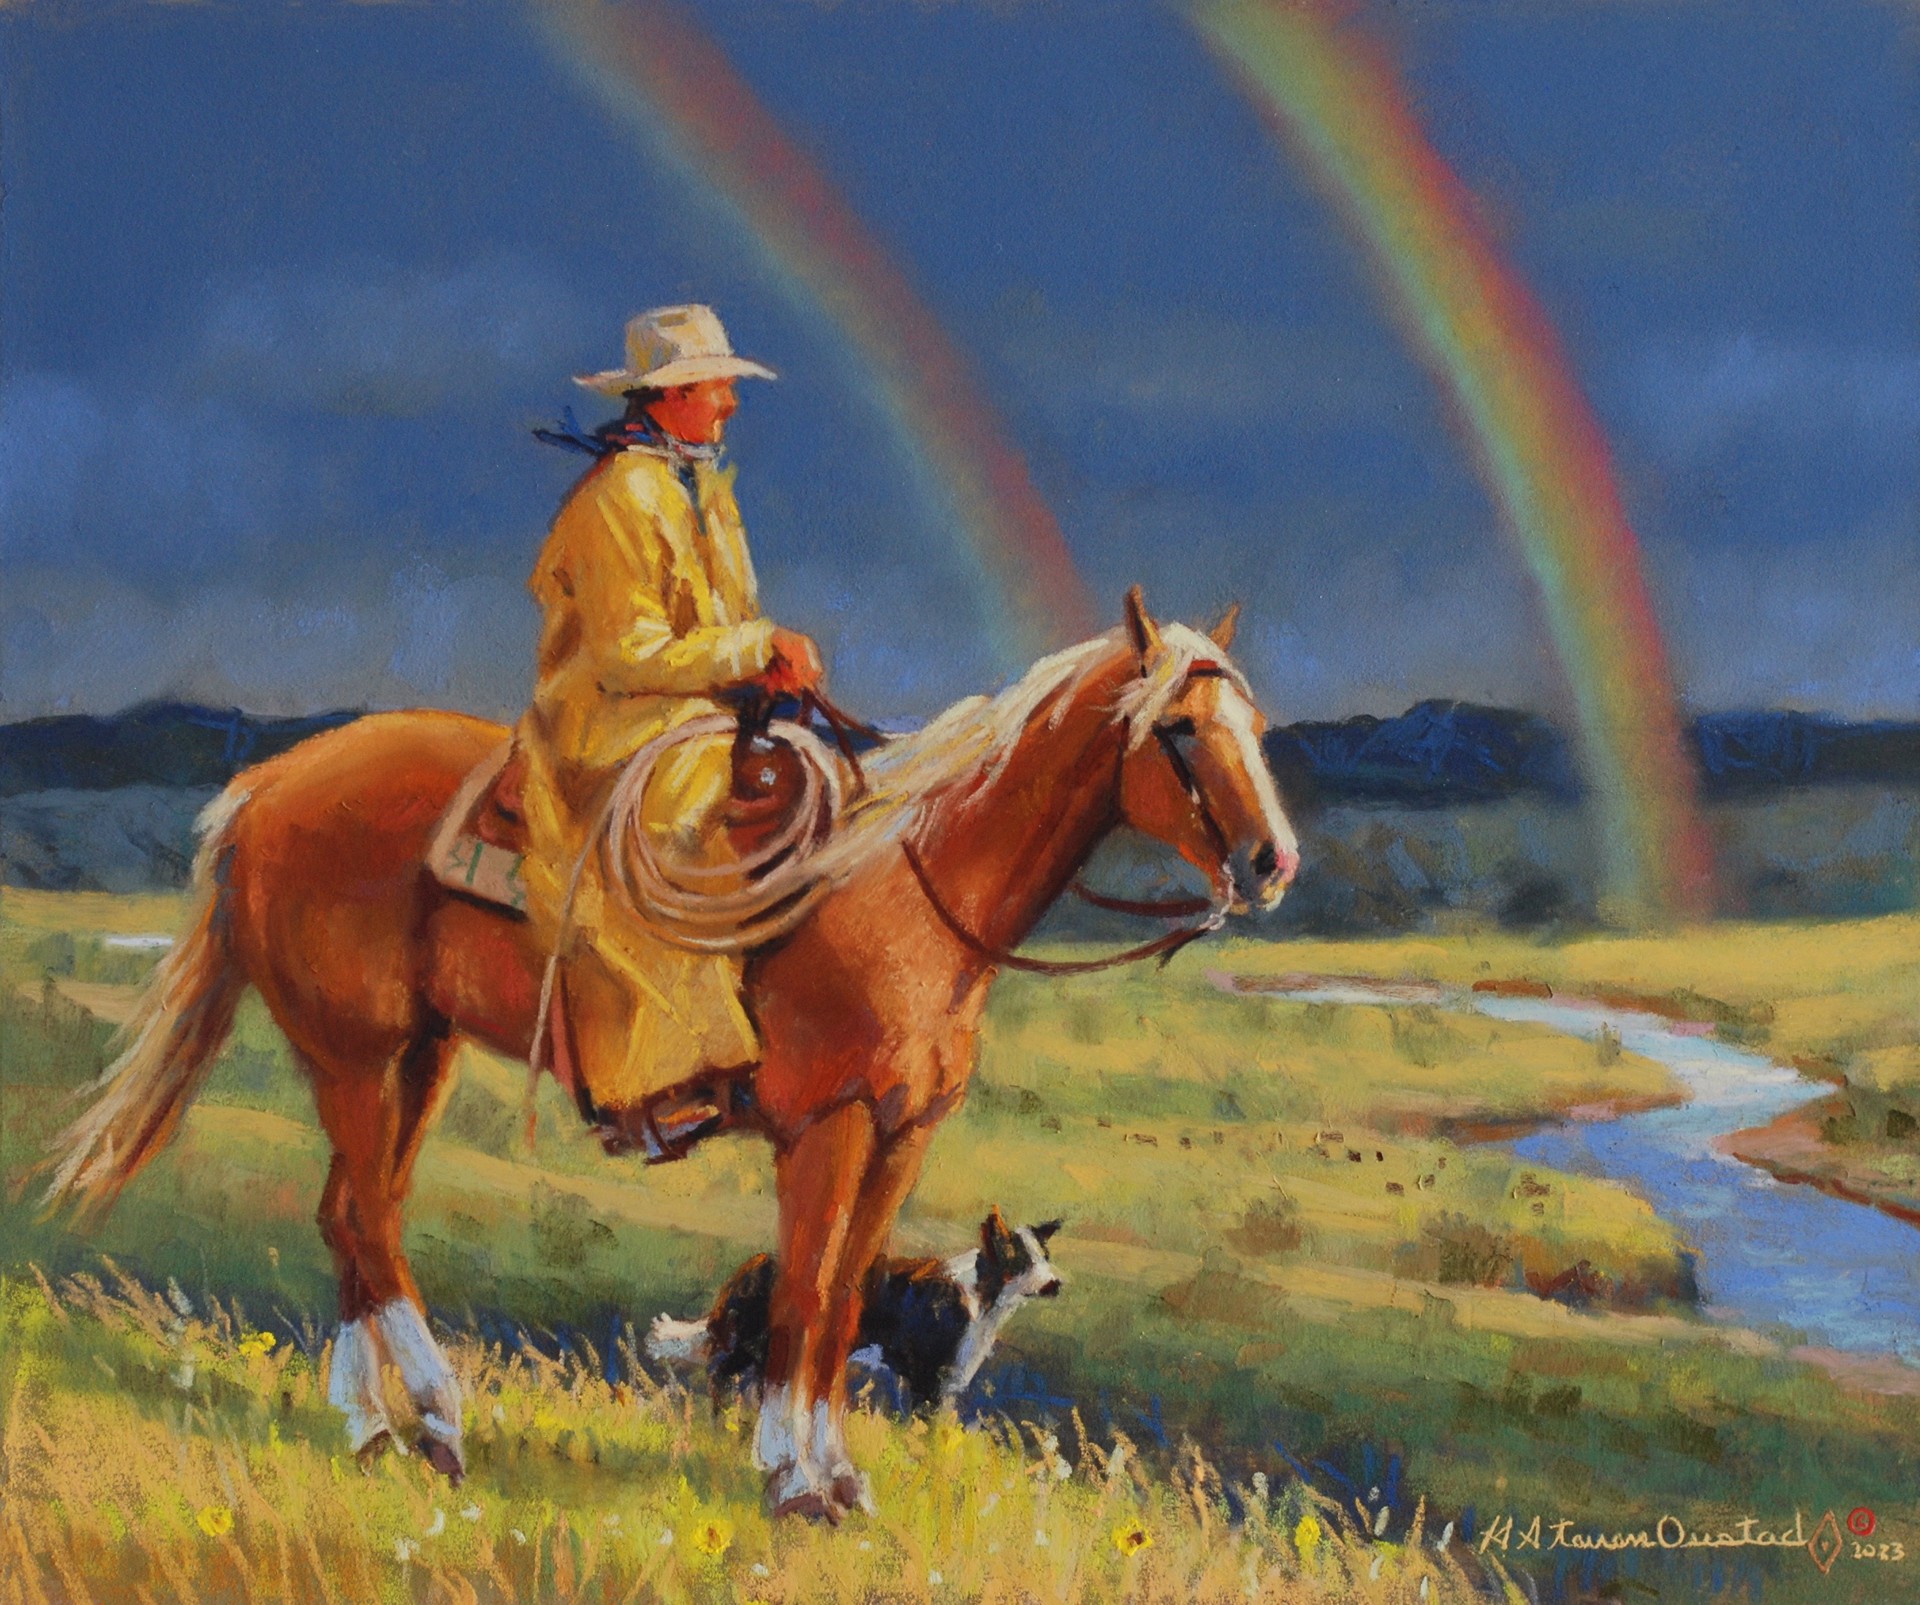 Double Rainbow Day by Steven Oiestad